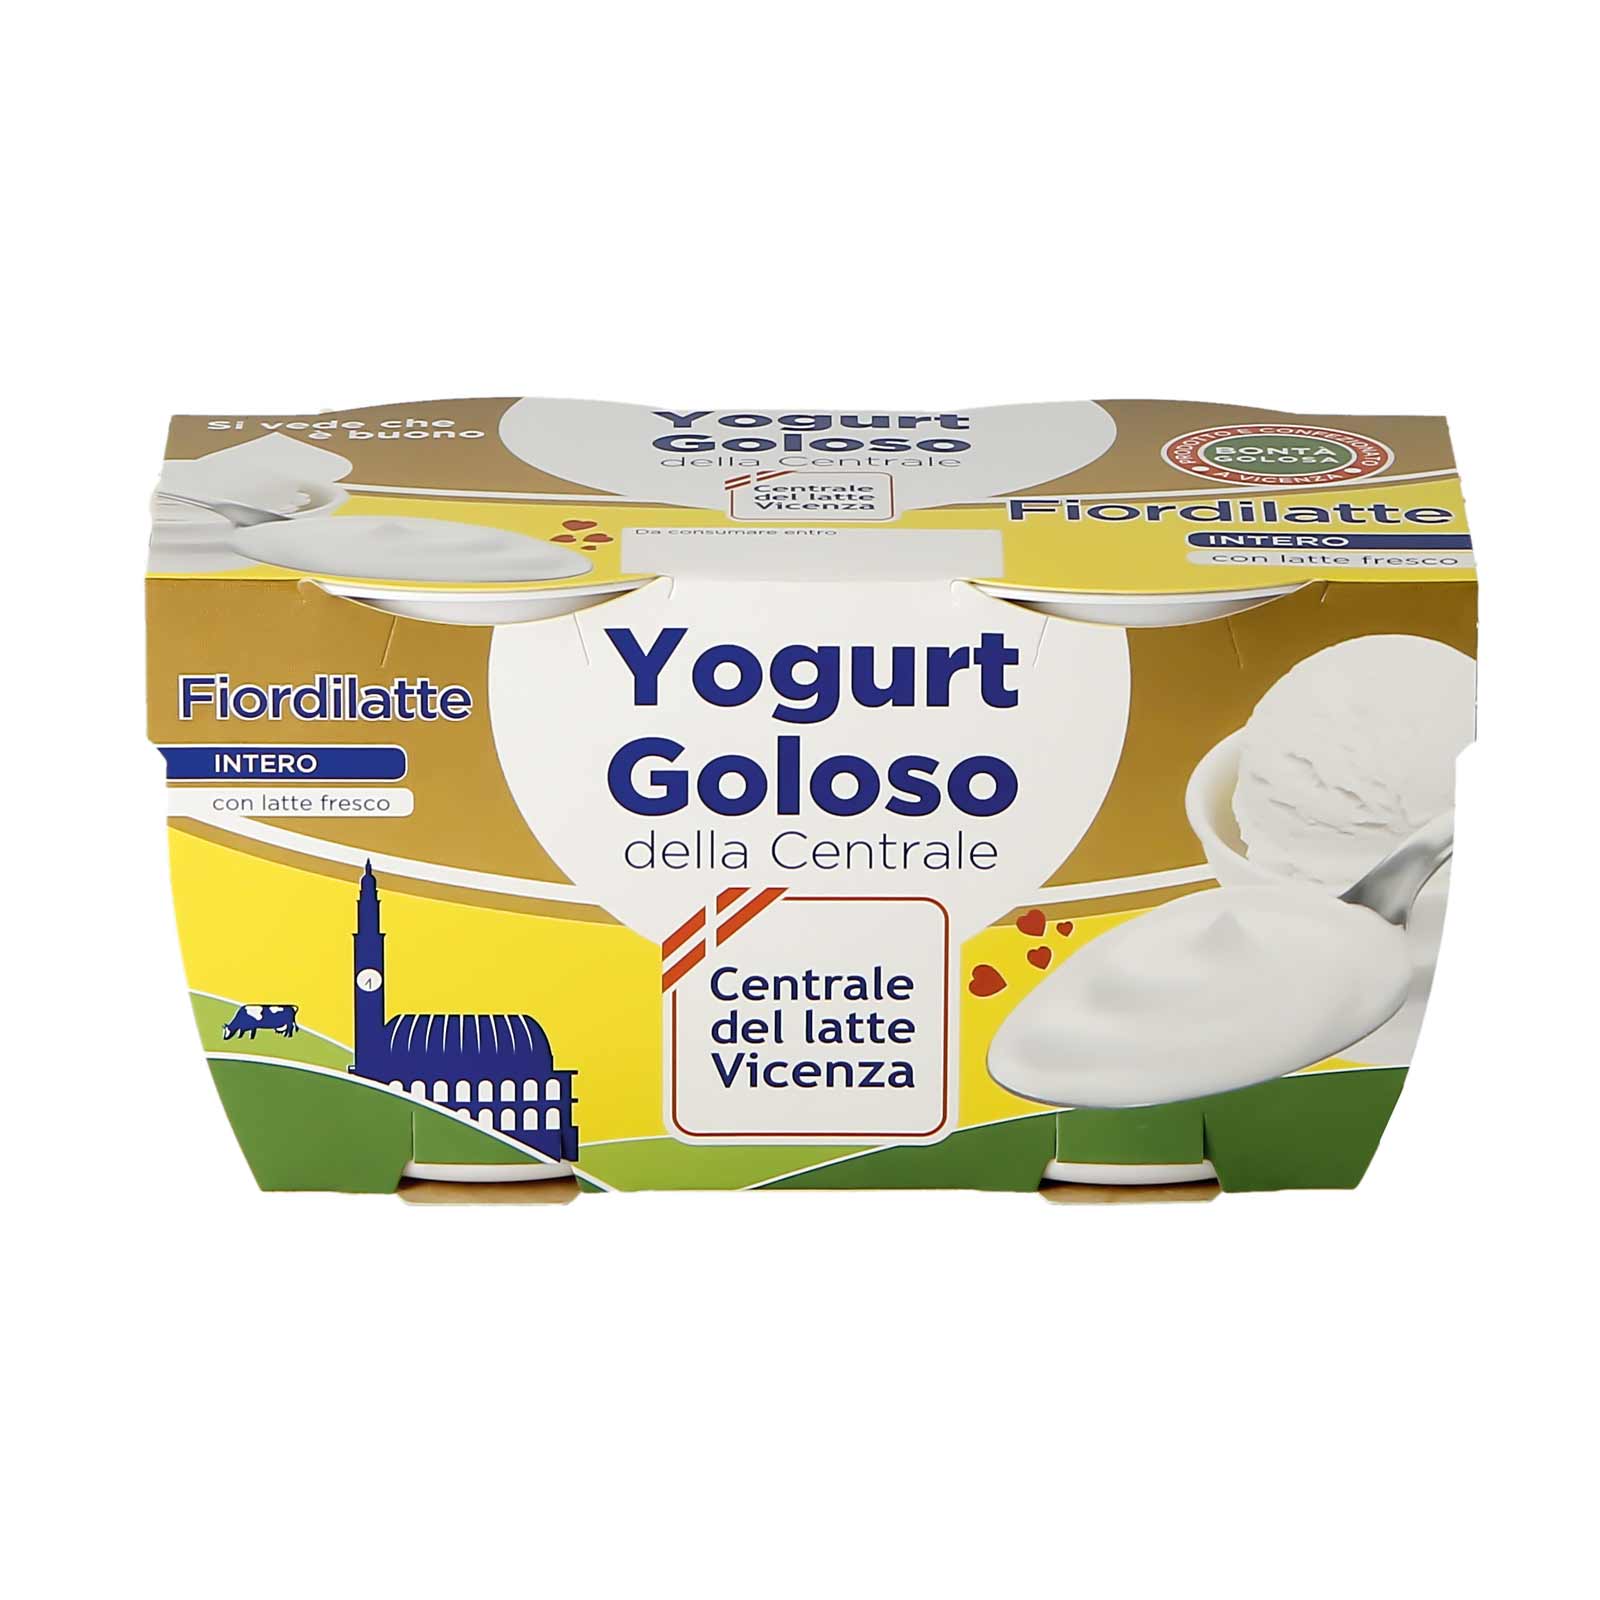 Yogurt goloso